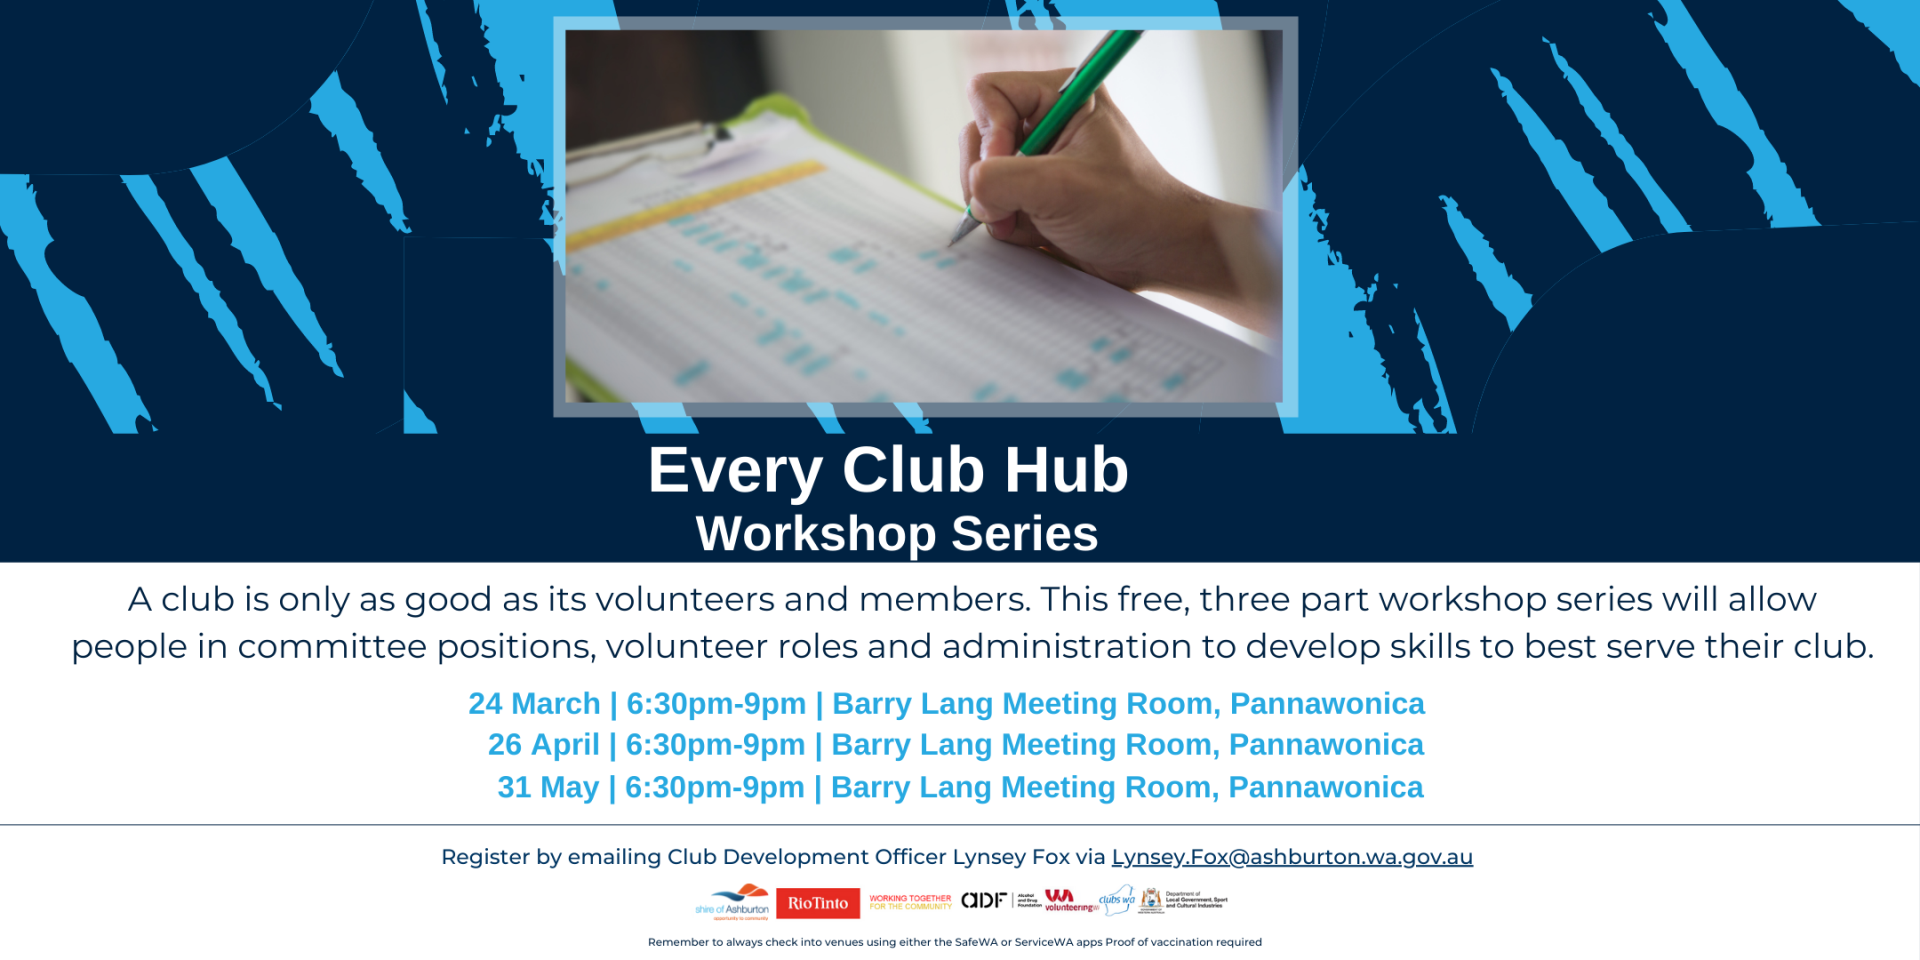 Every Club Hub Workshop Series - Pannawonica